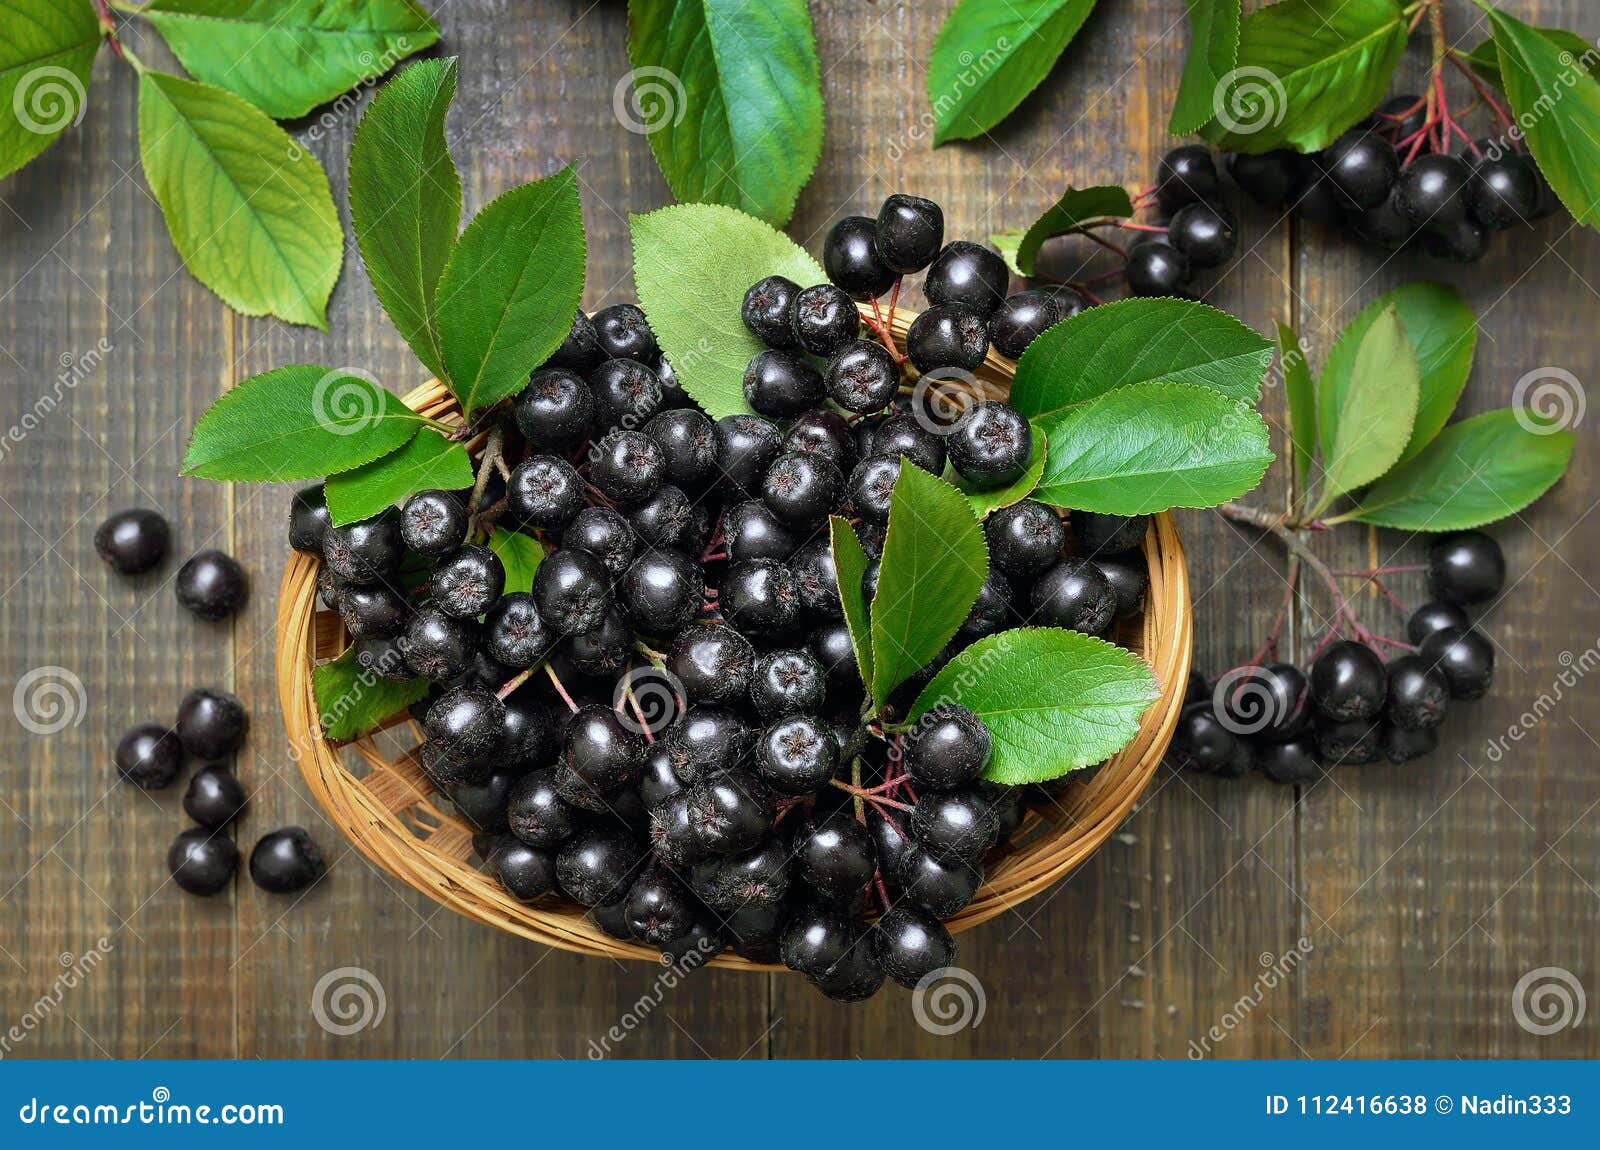 black chokeberry aronia melanocarpa in wicker basket